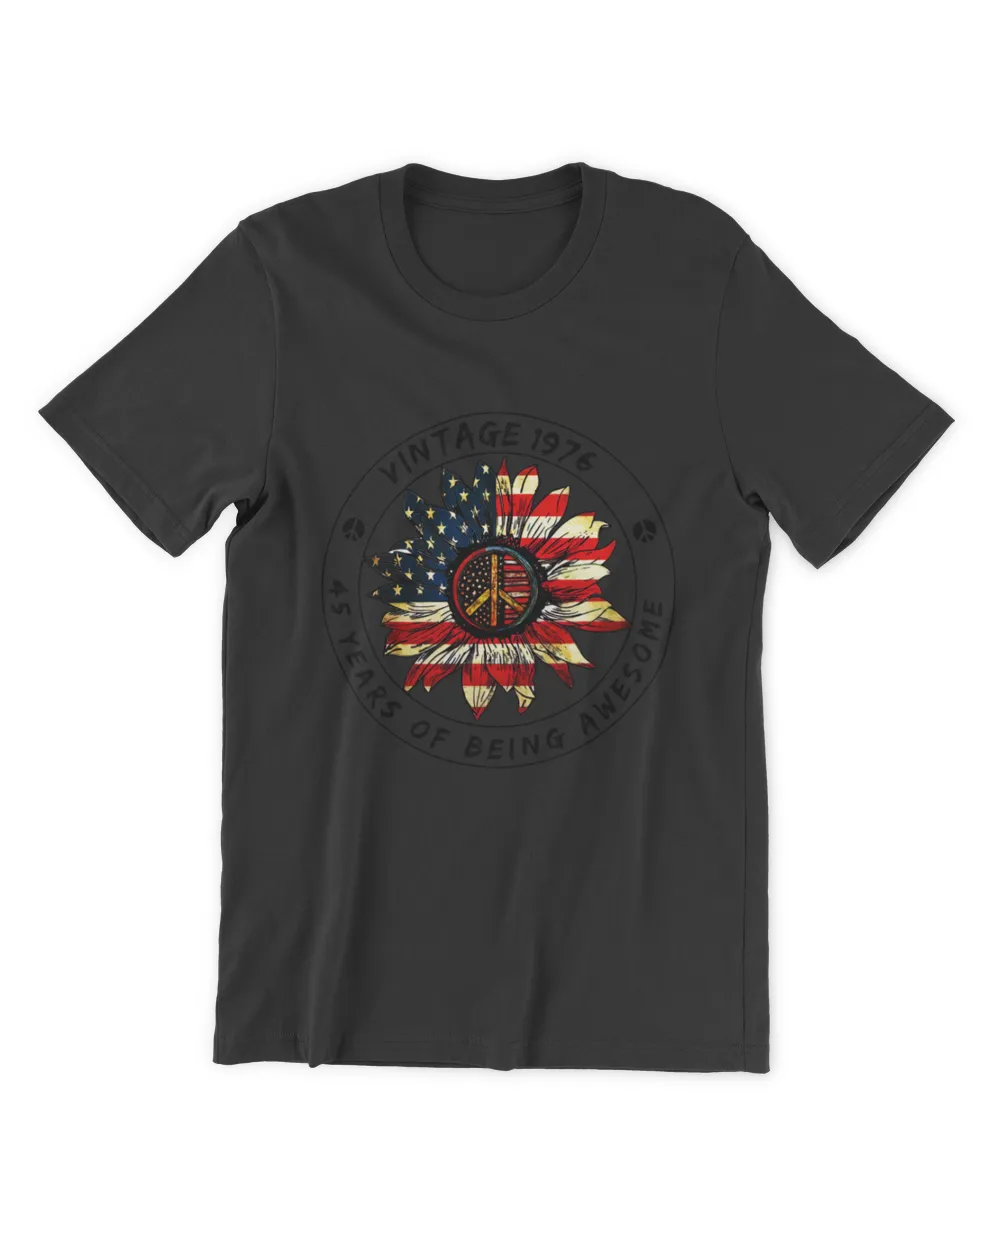 America Vintage 1976 Shirt